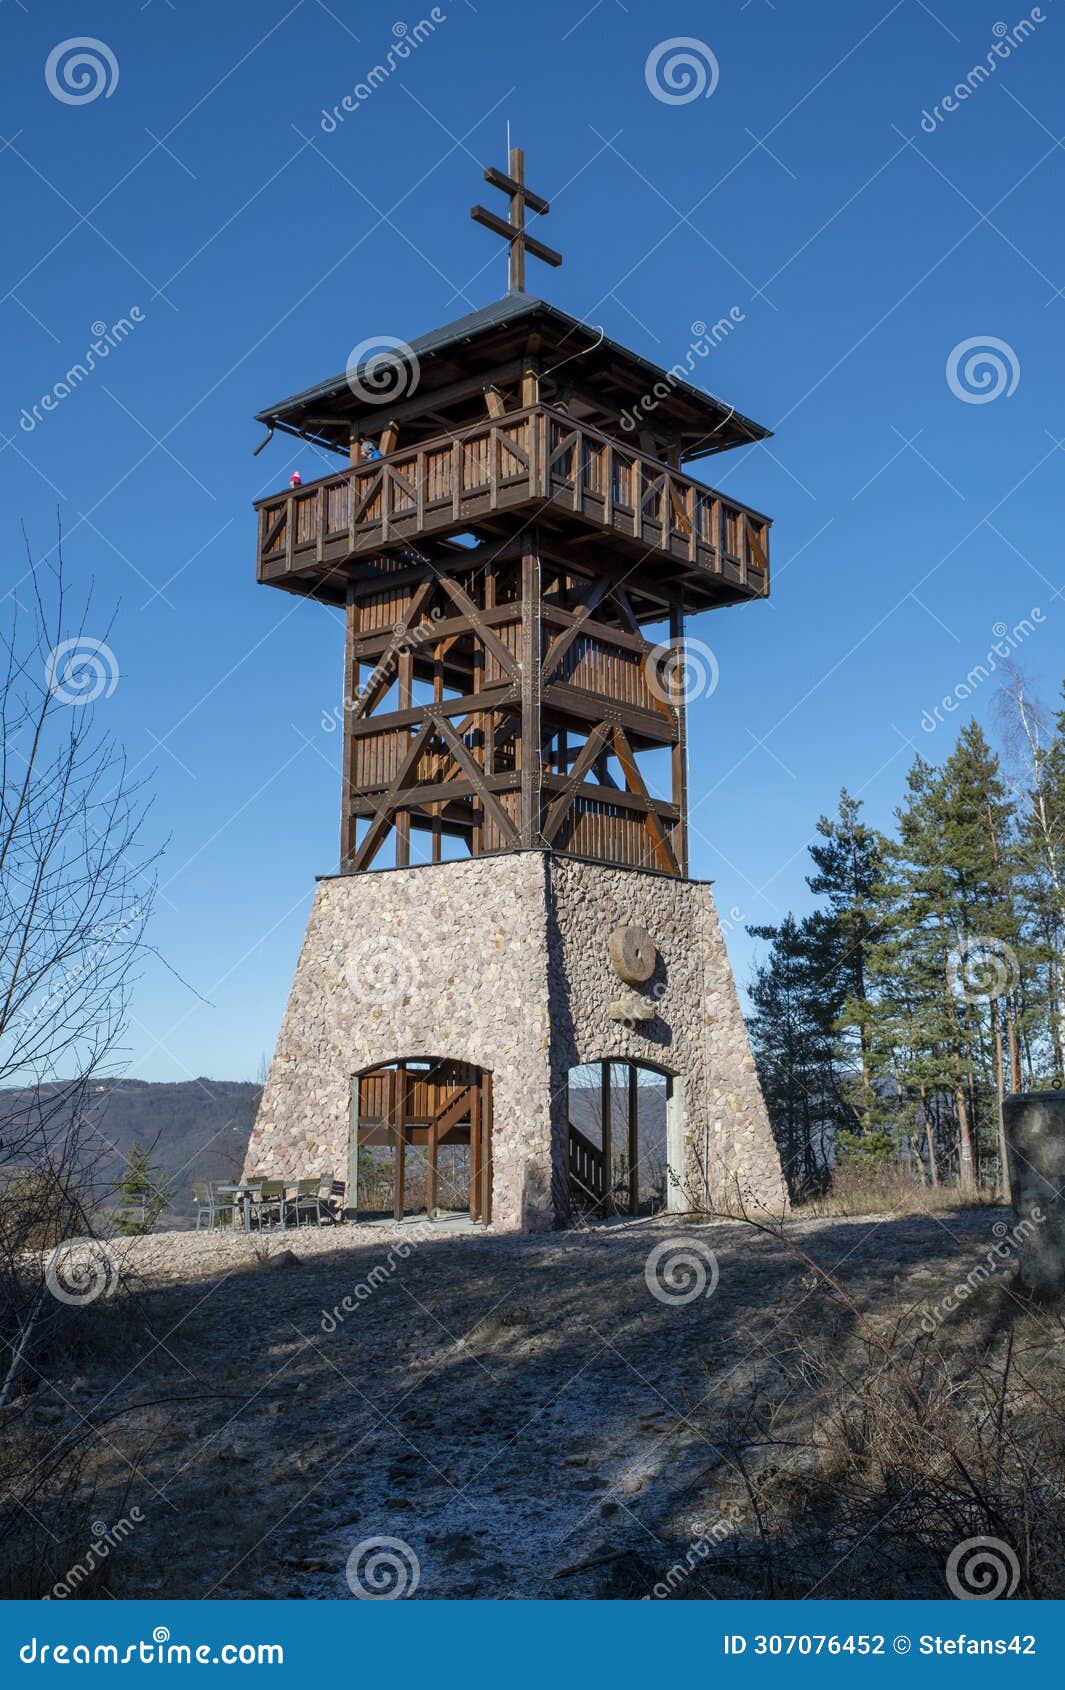 wooden lookout tower or observation tower haj. nova bana. slovakia